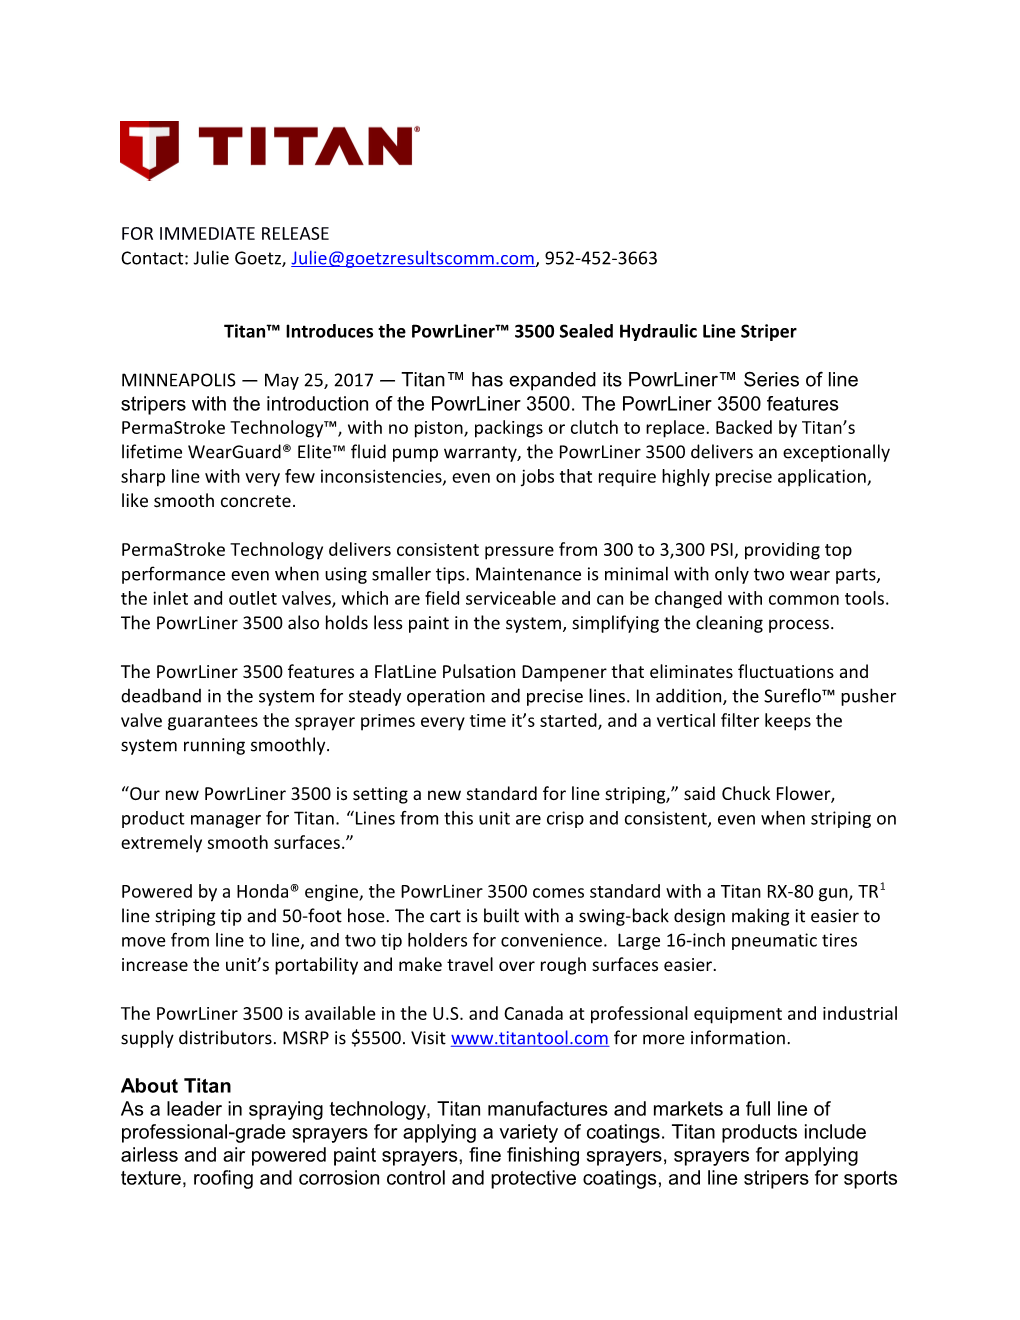 Titan Introduces the Powrliner 3500 Sealed Hydraulic Line Striper